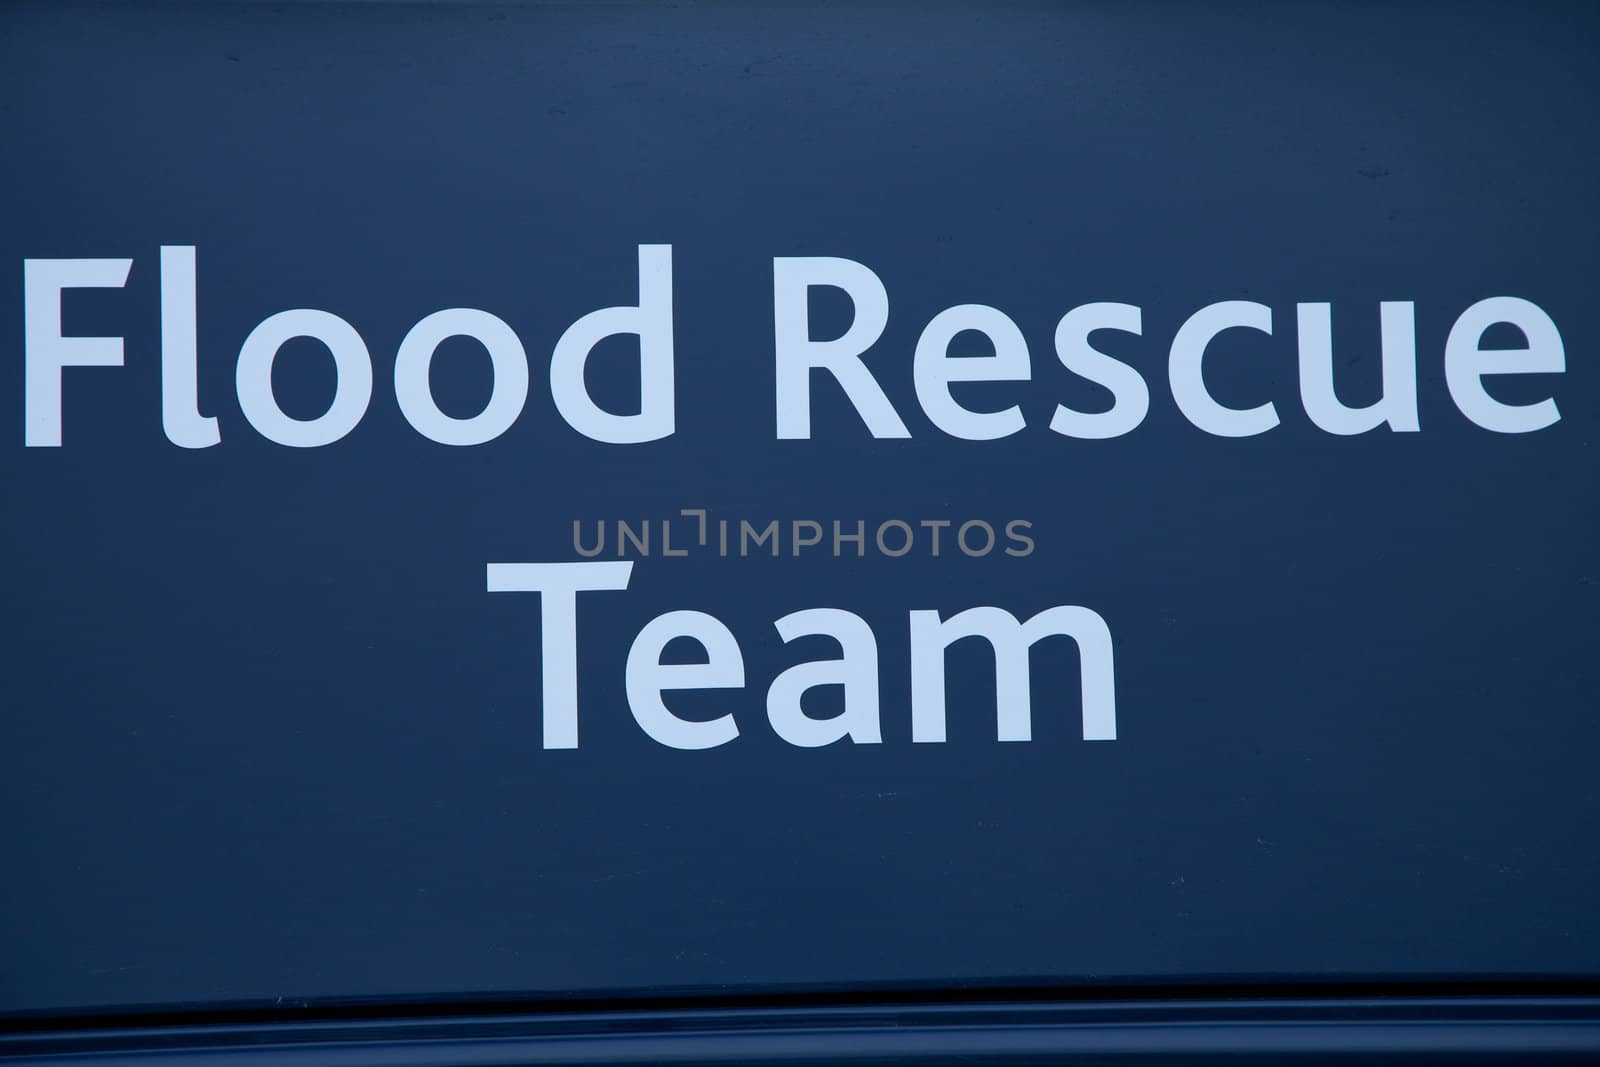 The words 'Flood Rescue Team' written in white on a dark blue background.